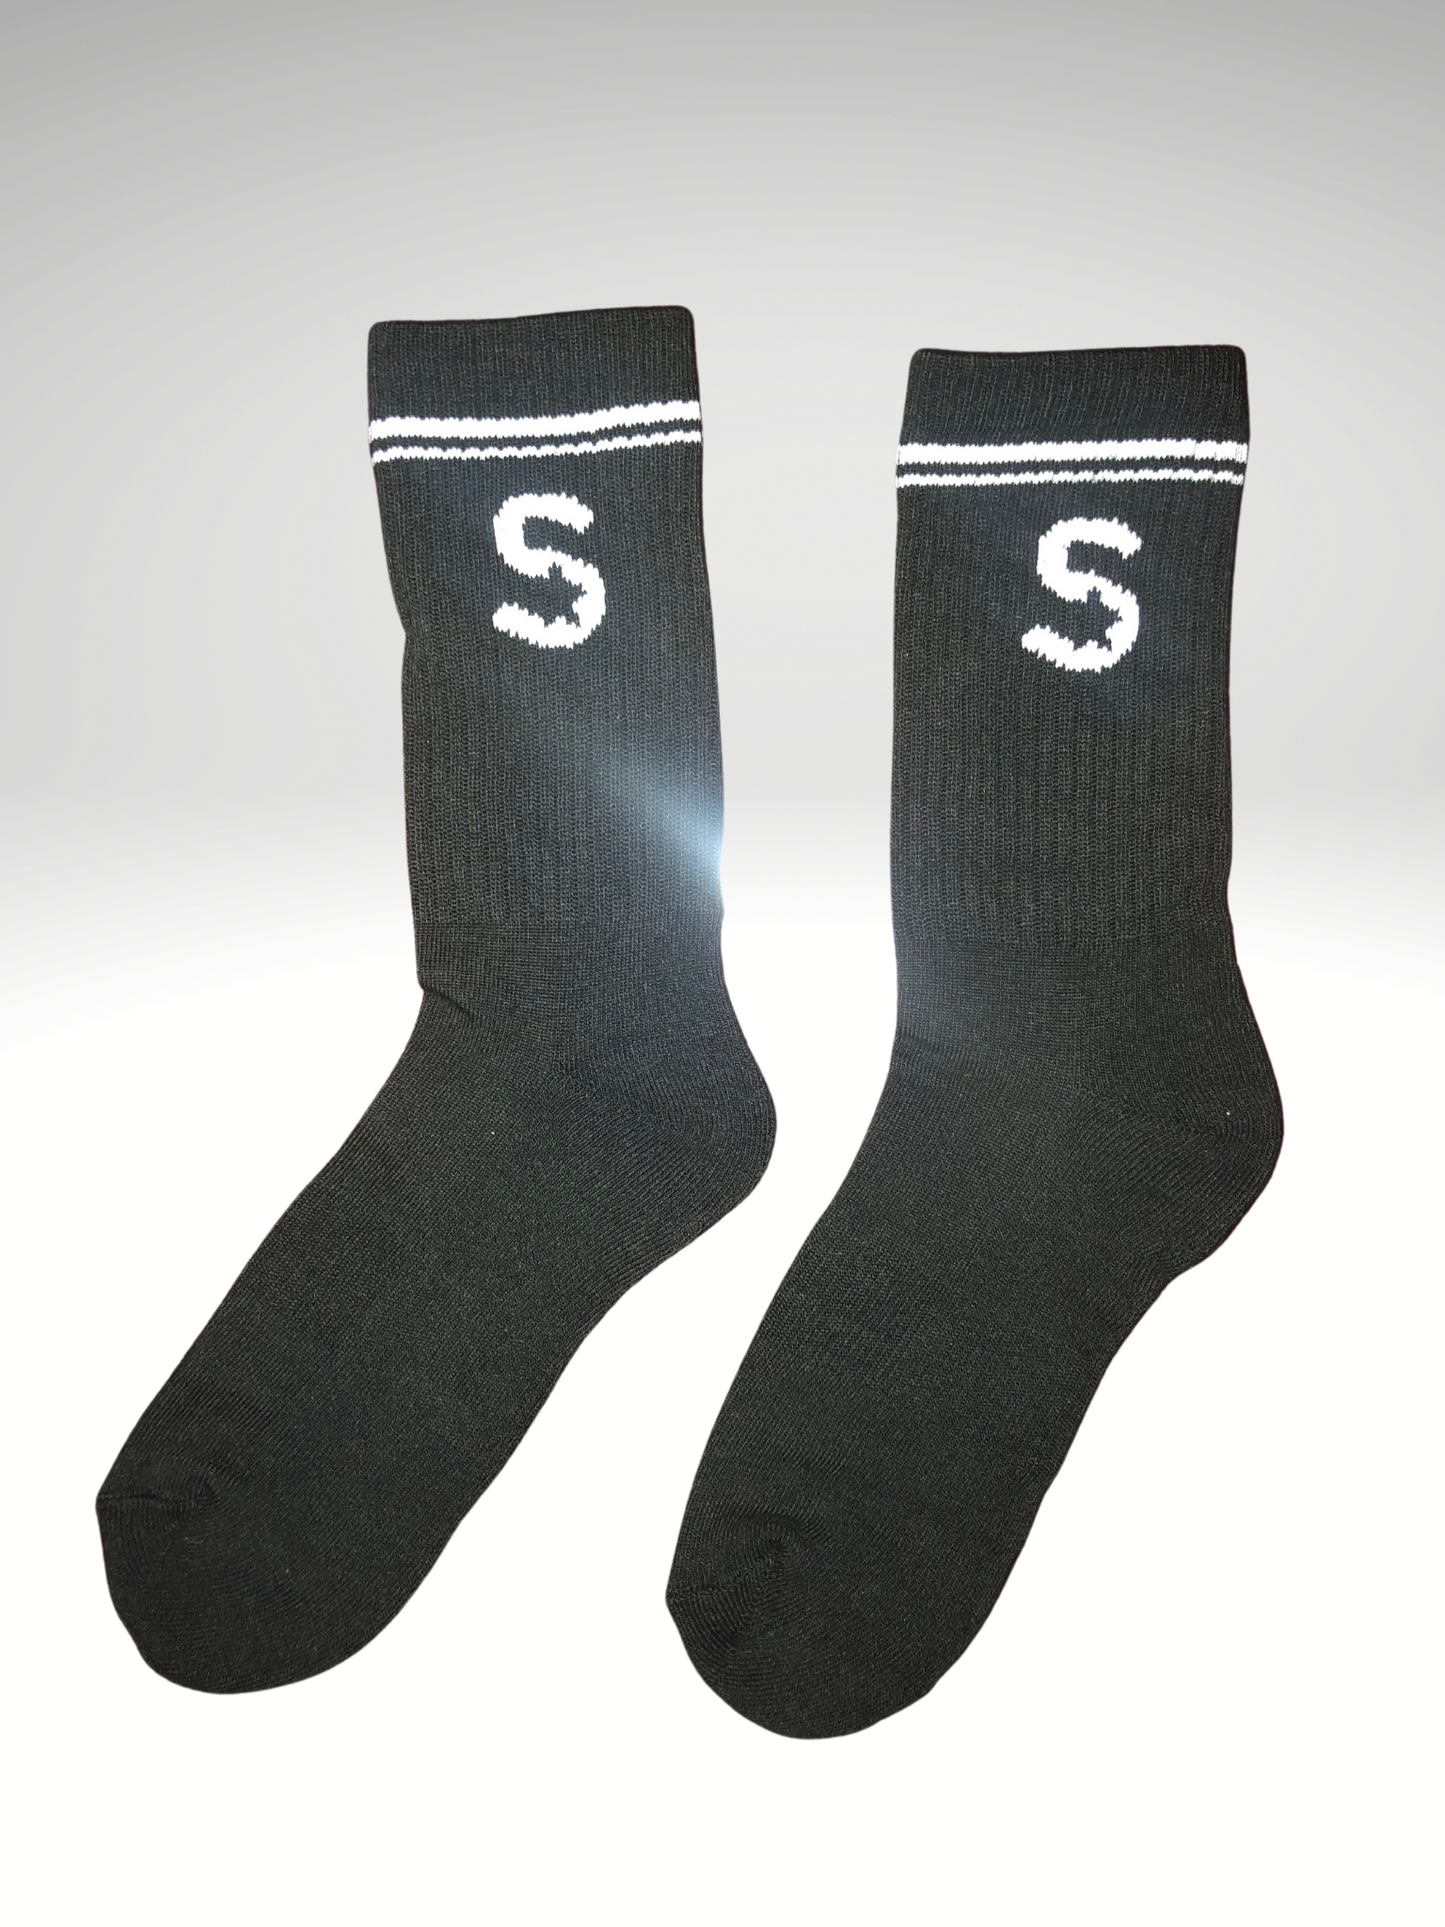 Iconic Black Socks